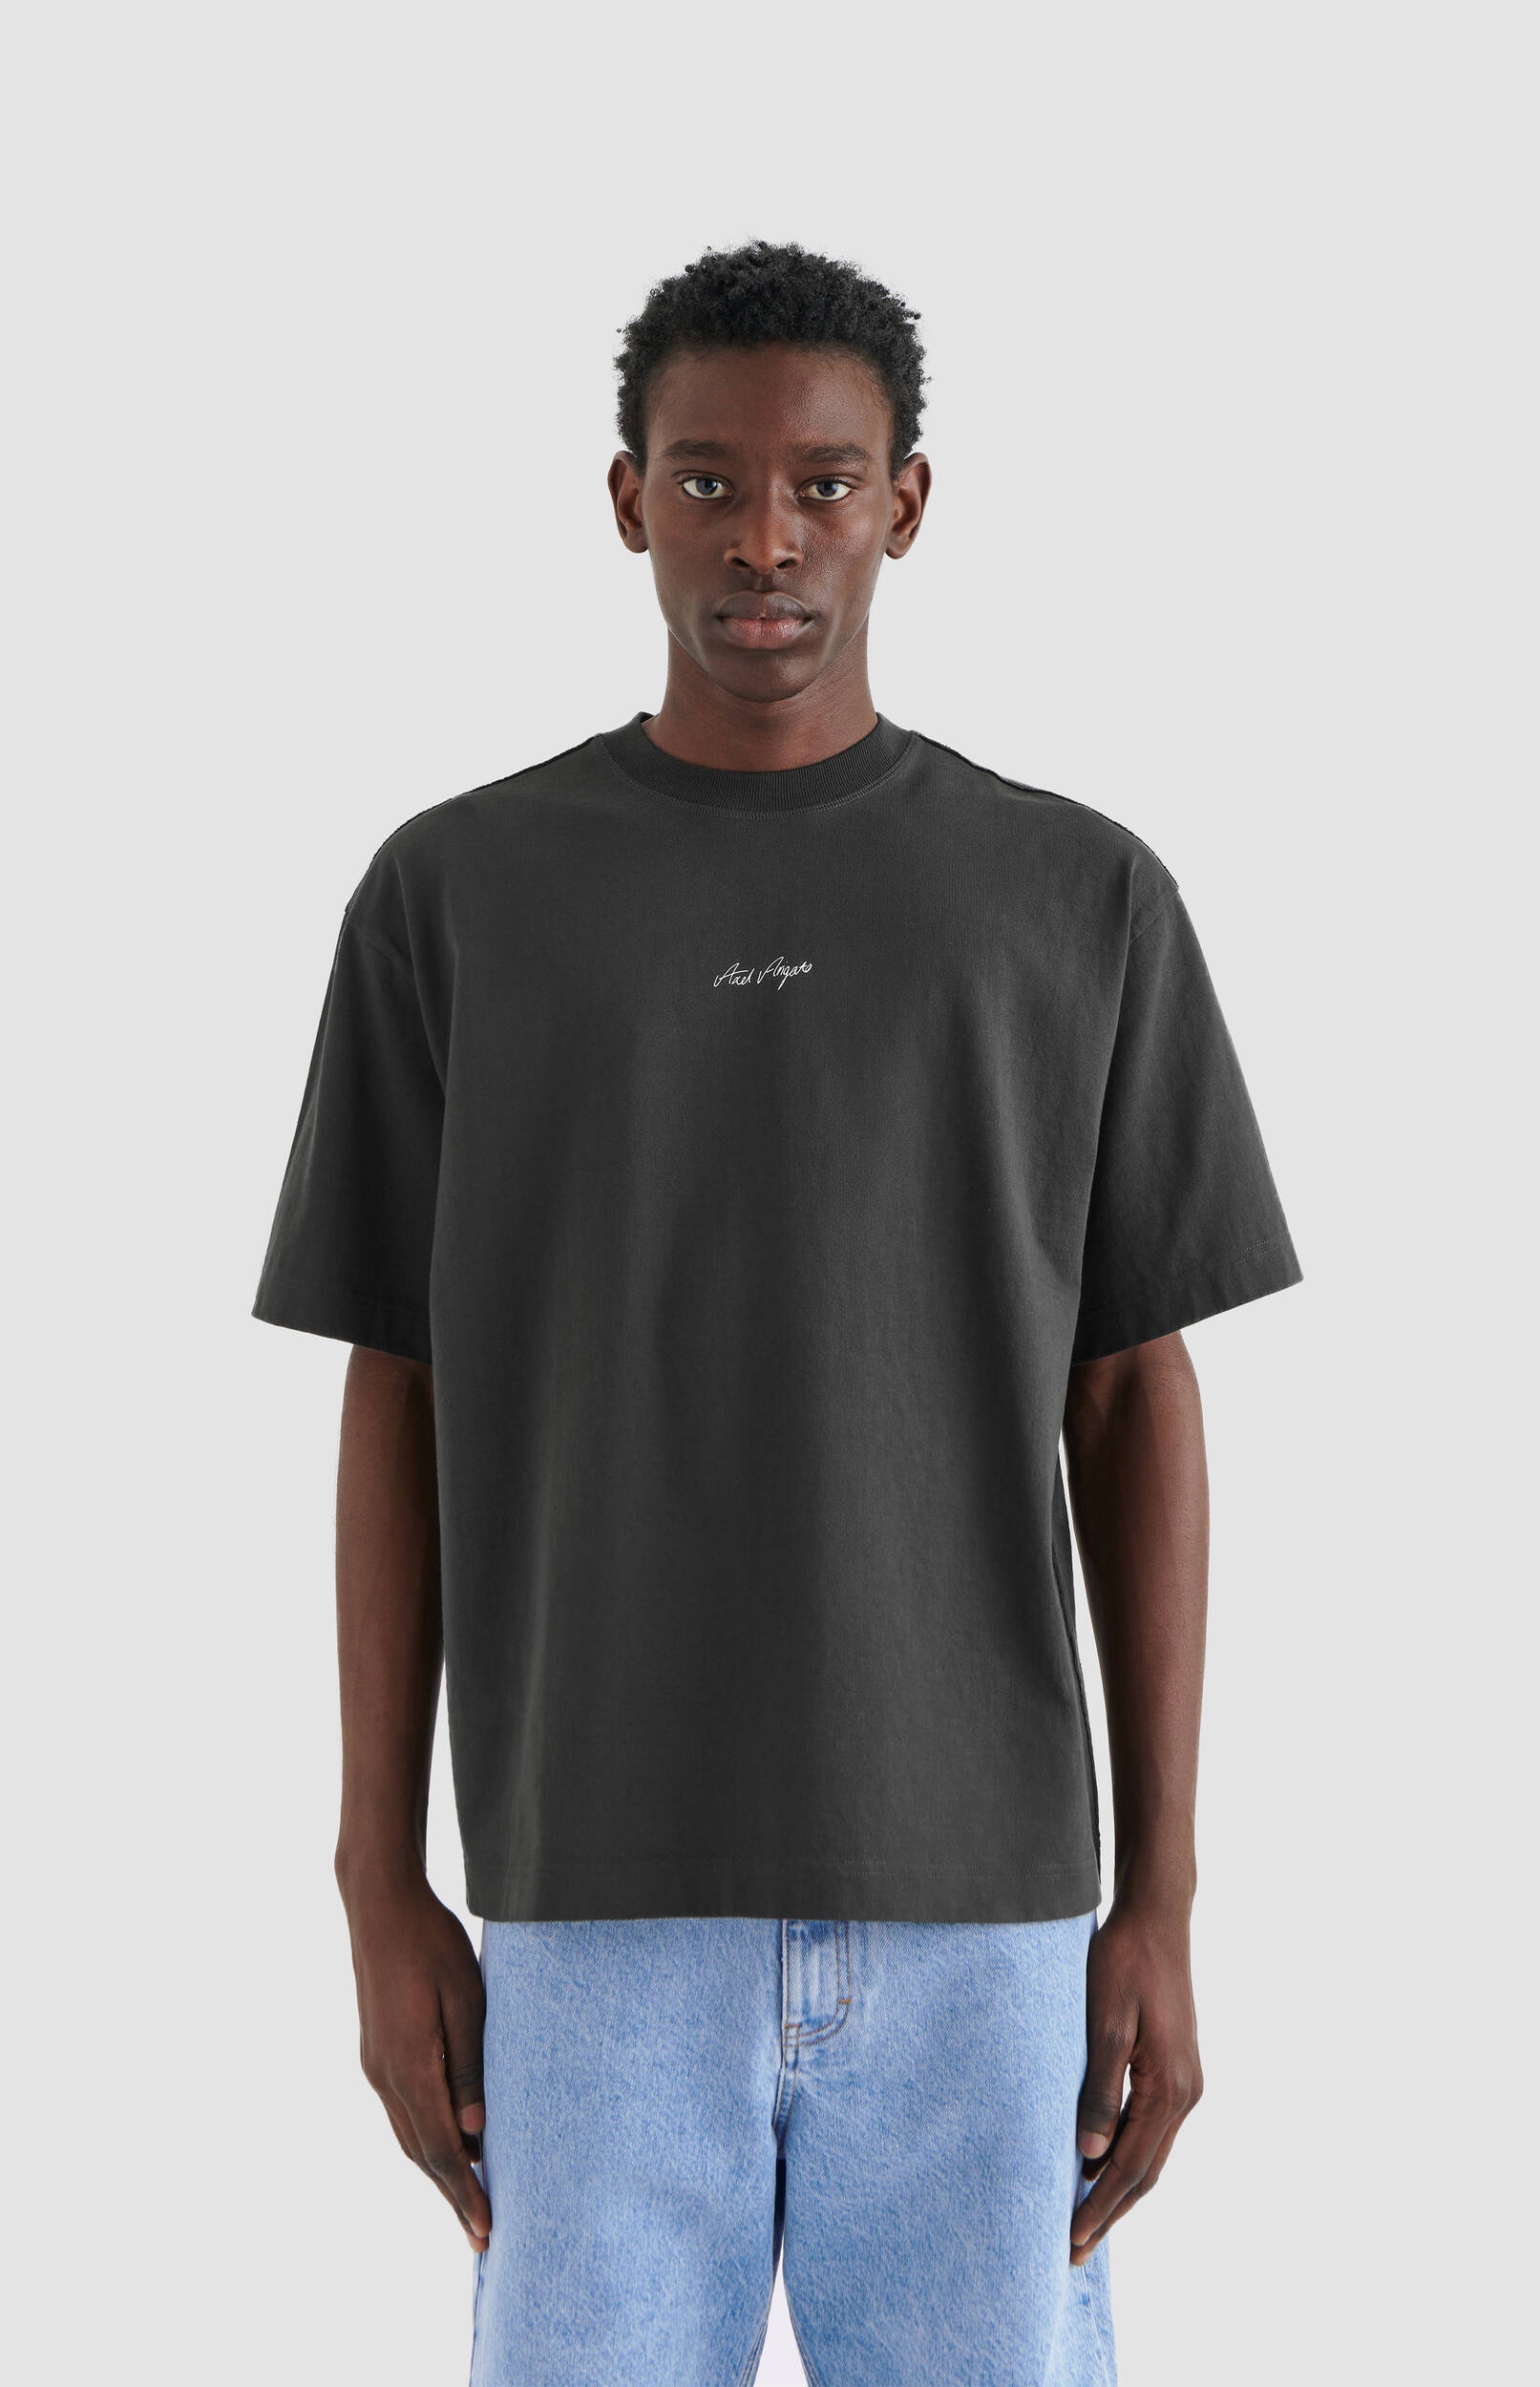 Sketch T-Shirt - 2